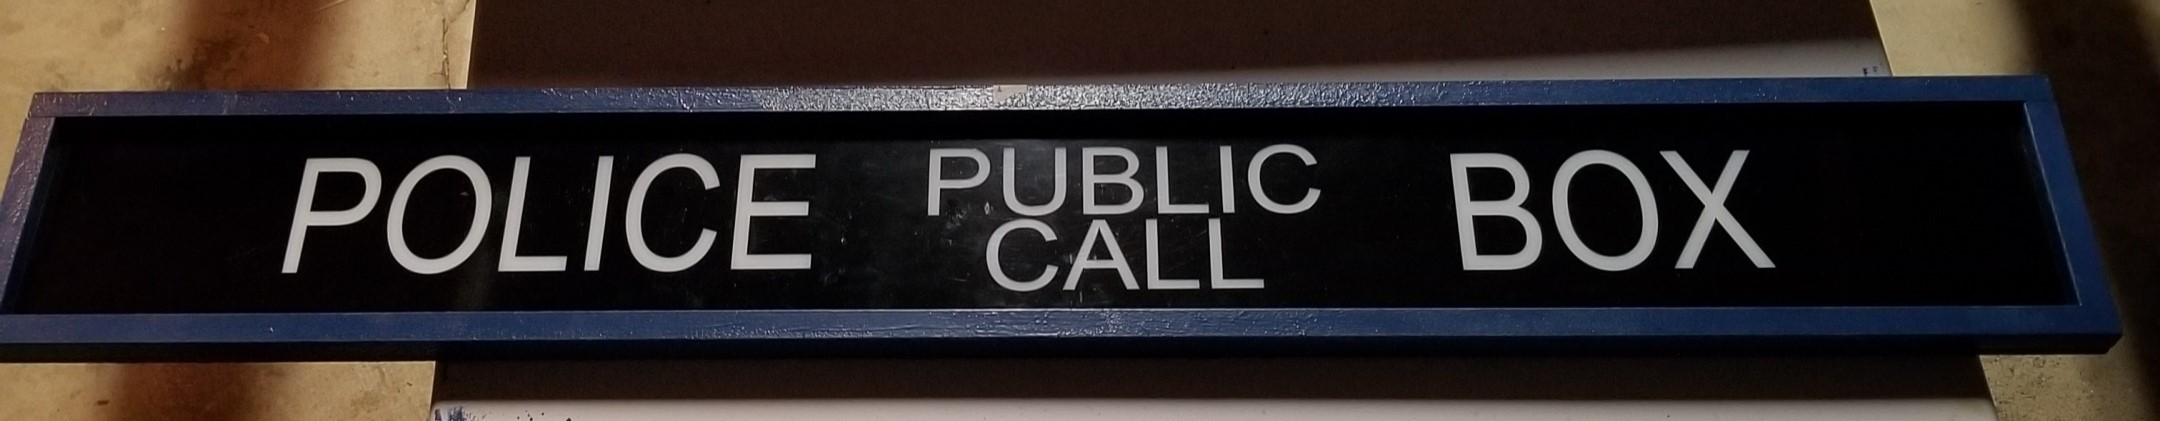 police call box sign.jpg